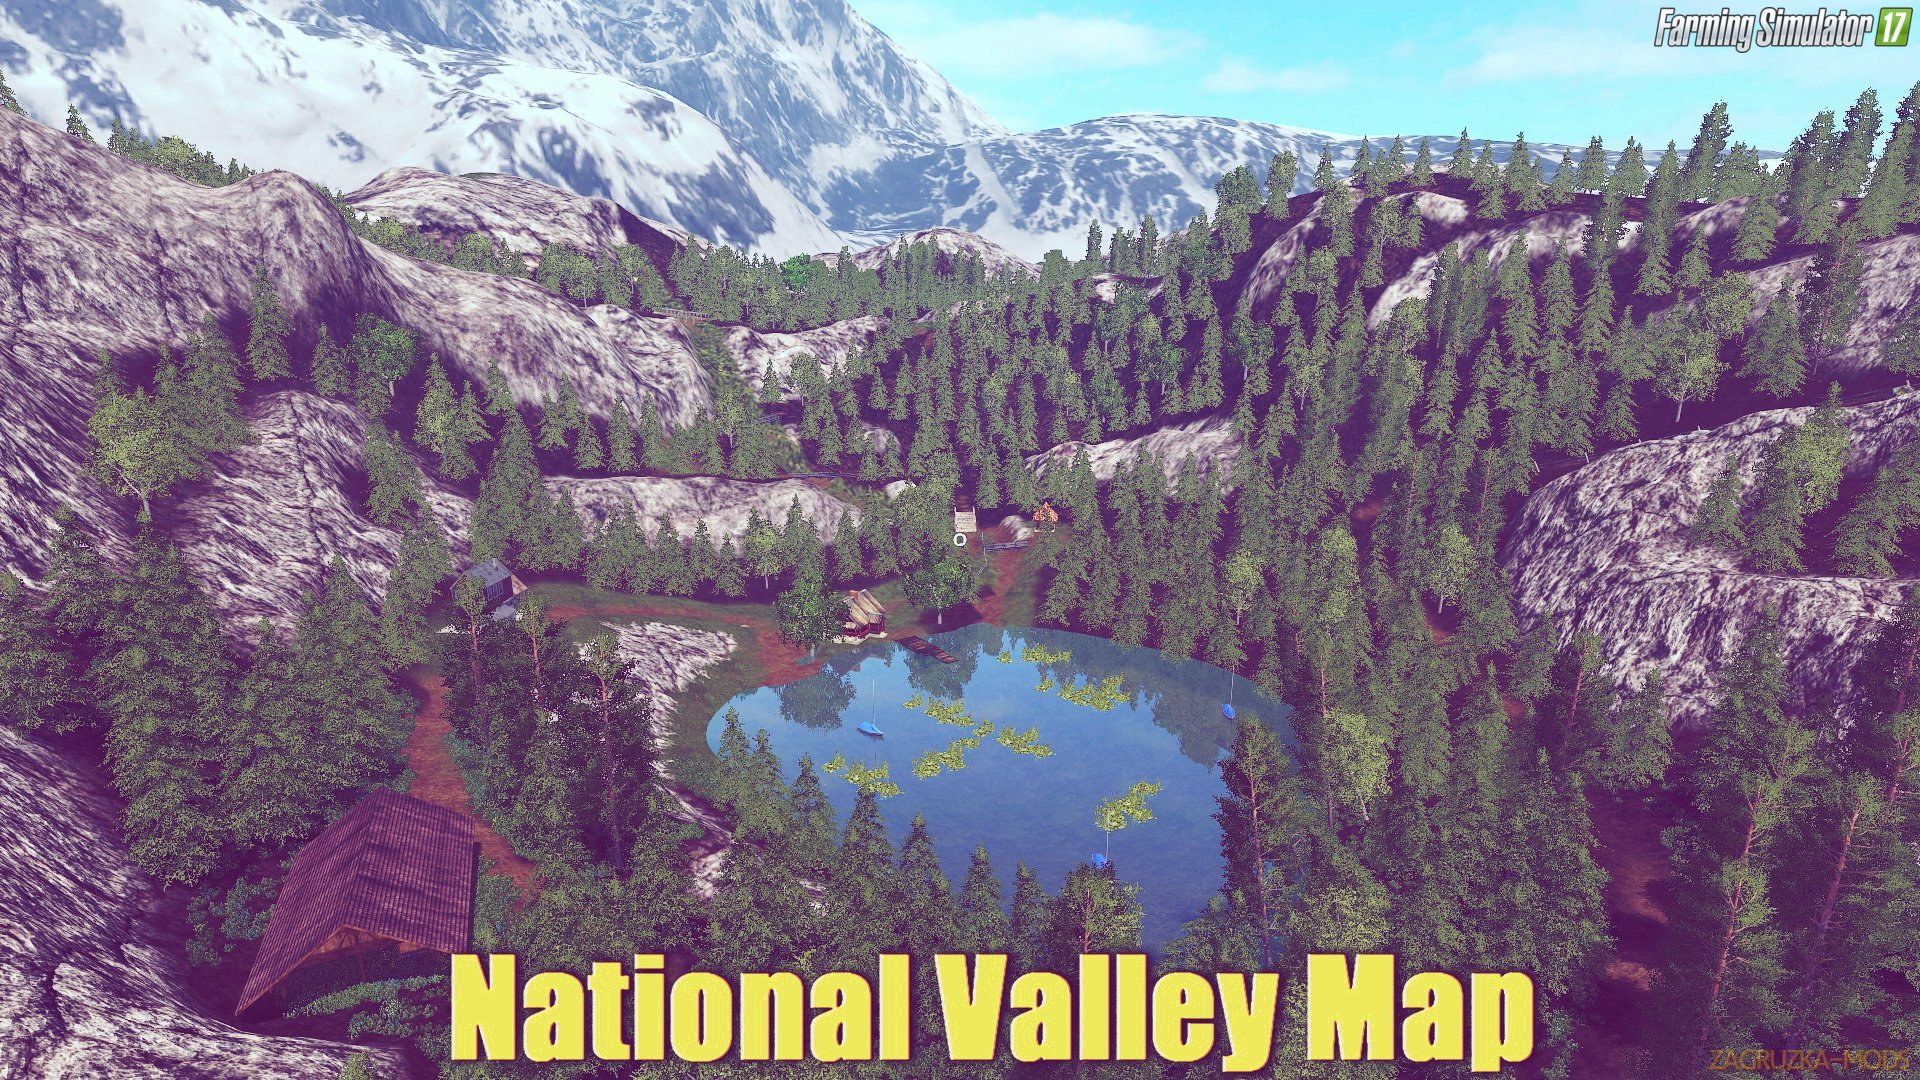 National Valley Map v1.0 for FS 17